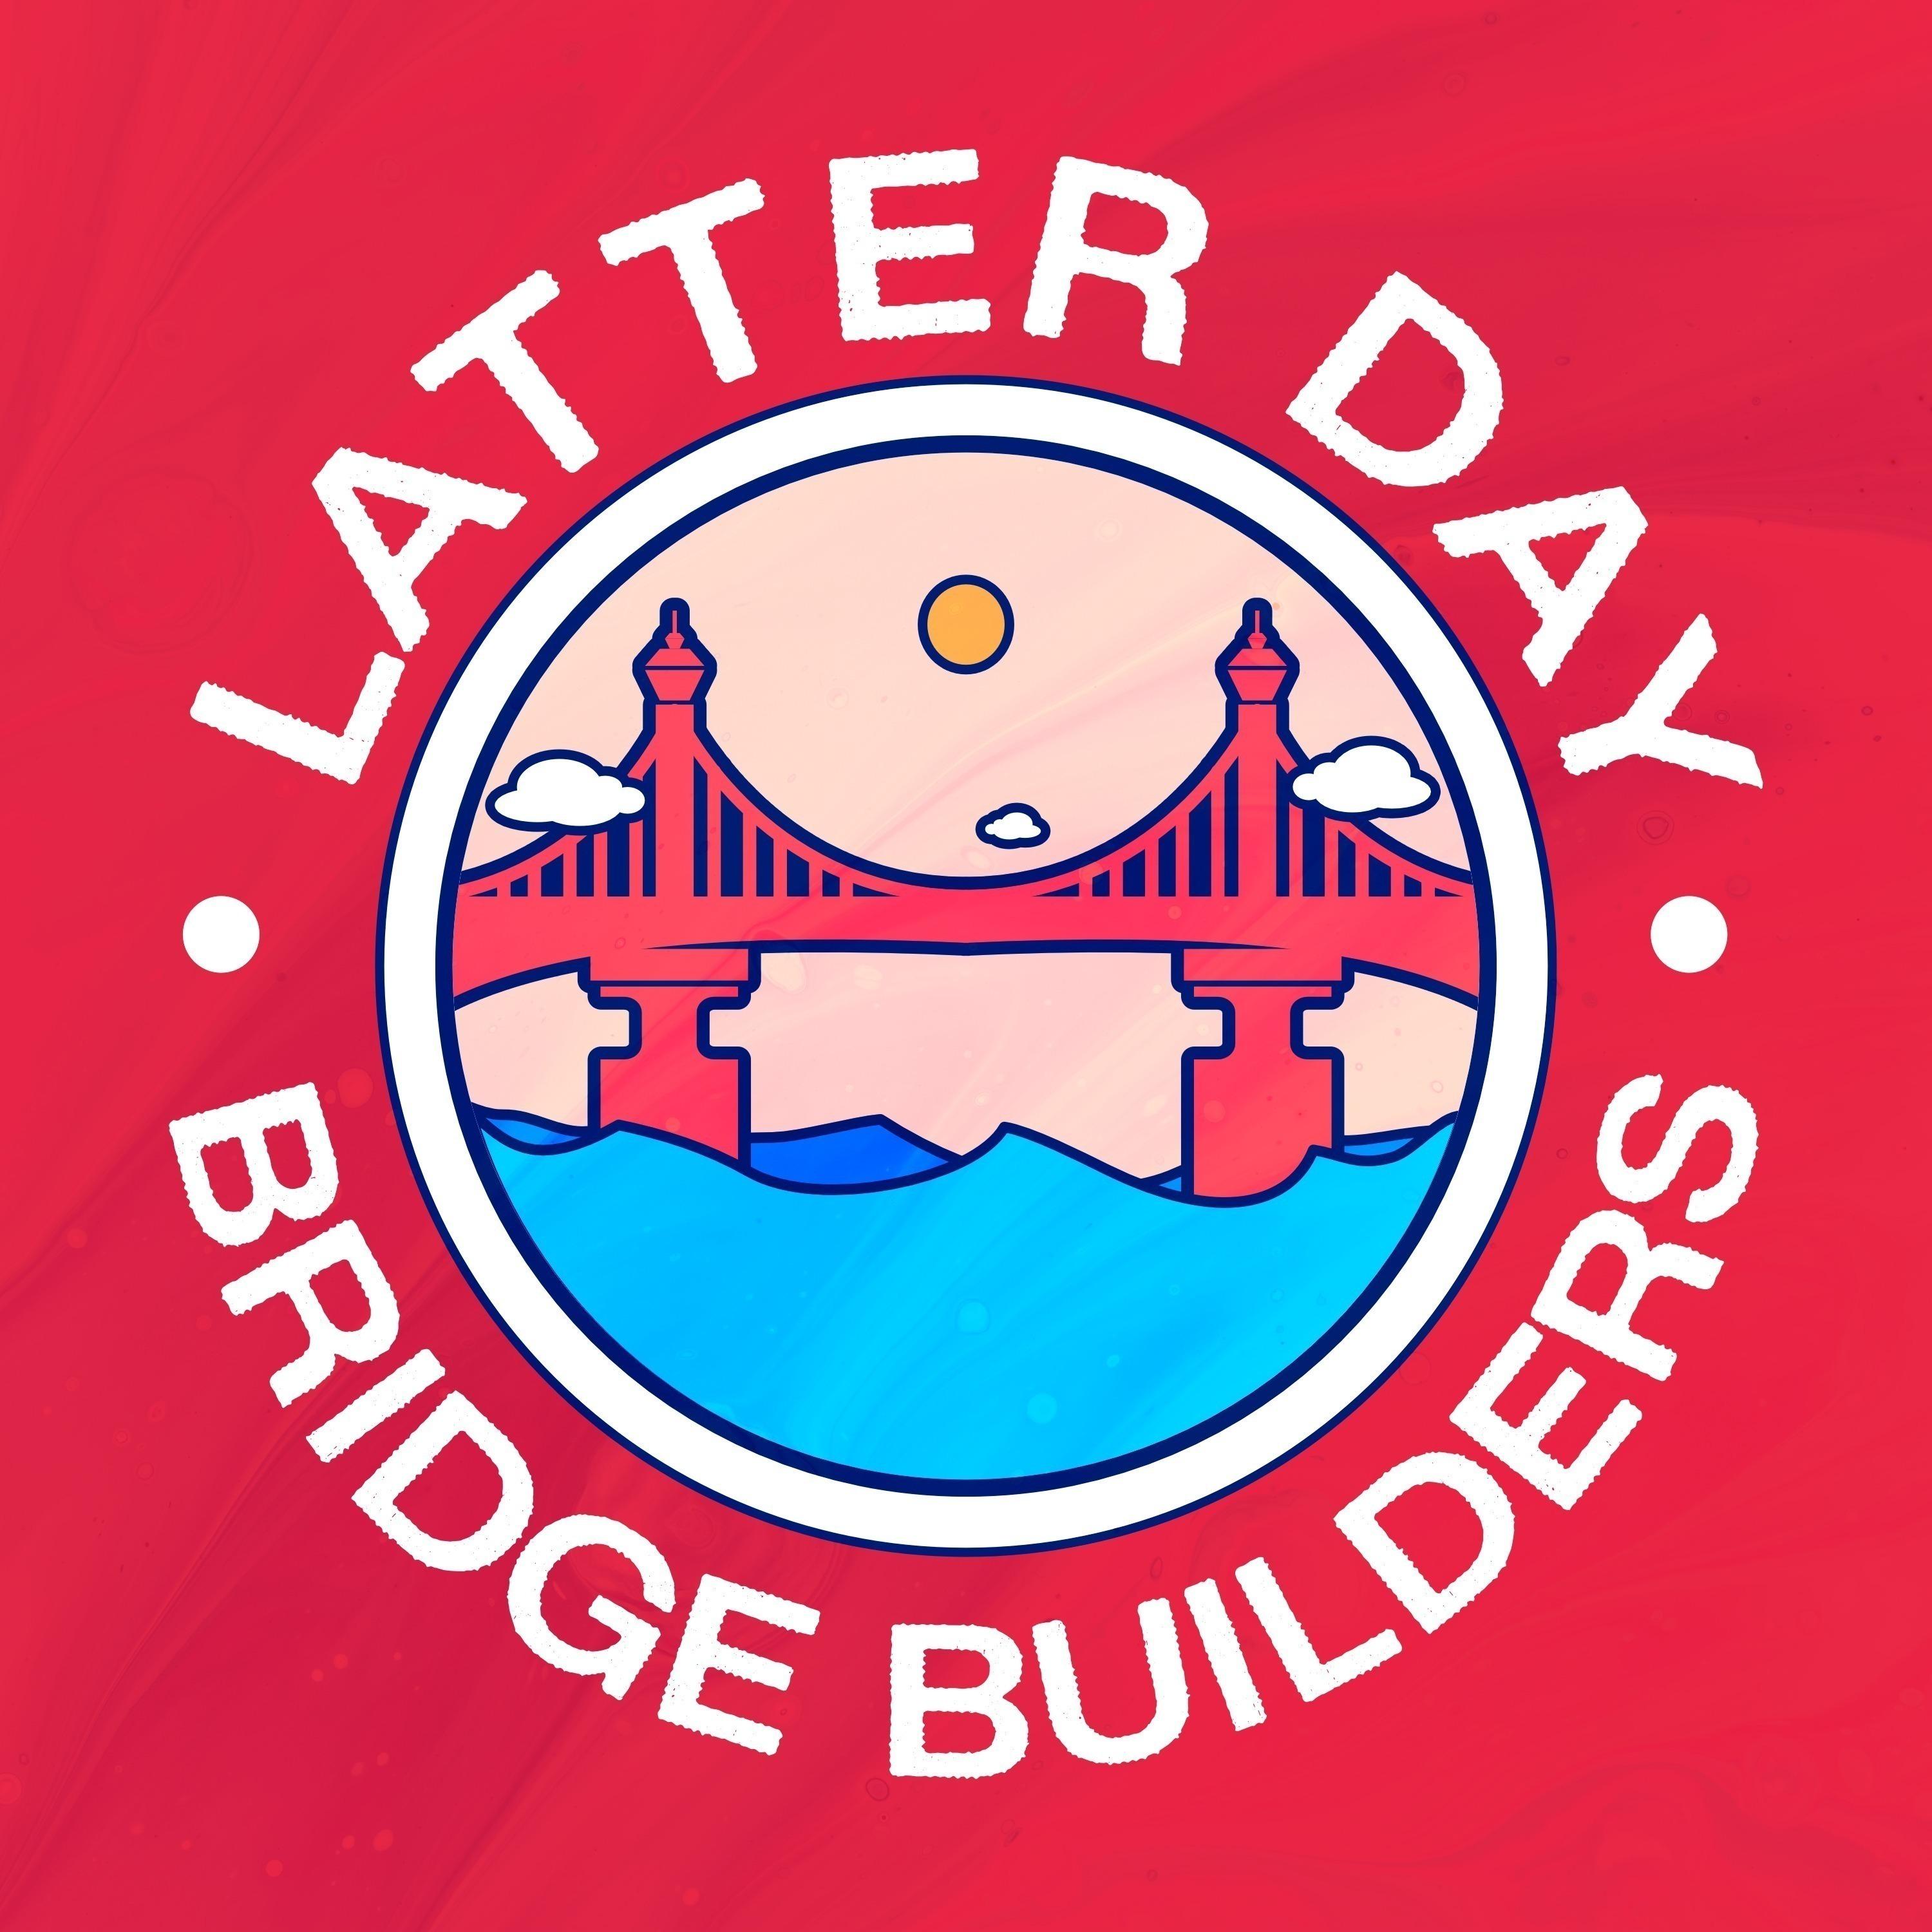 Latter Day Bridge Builders